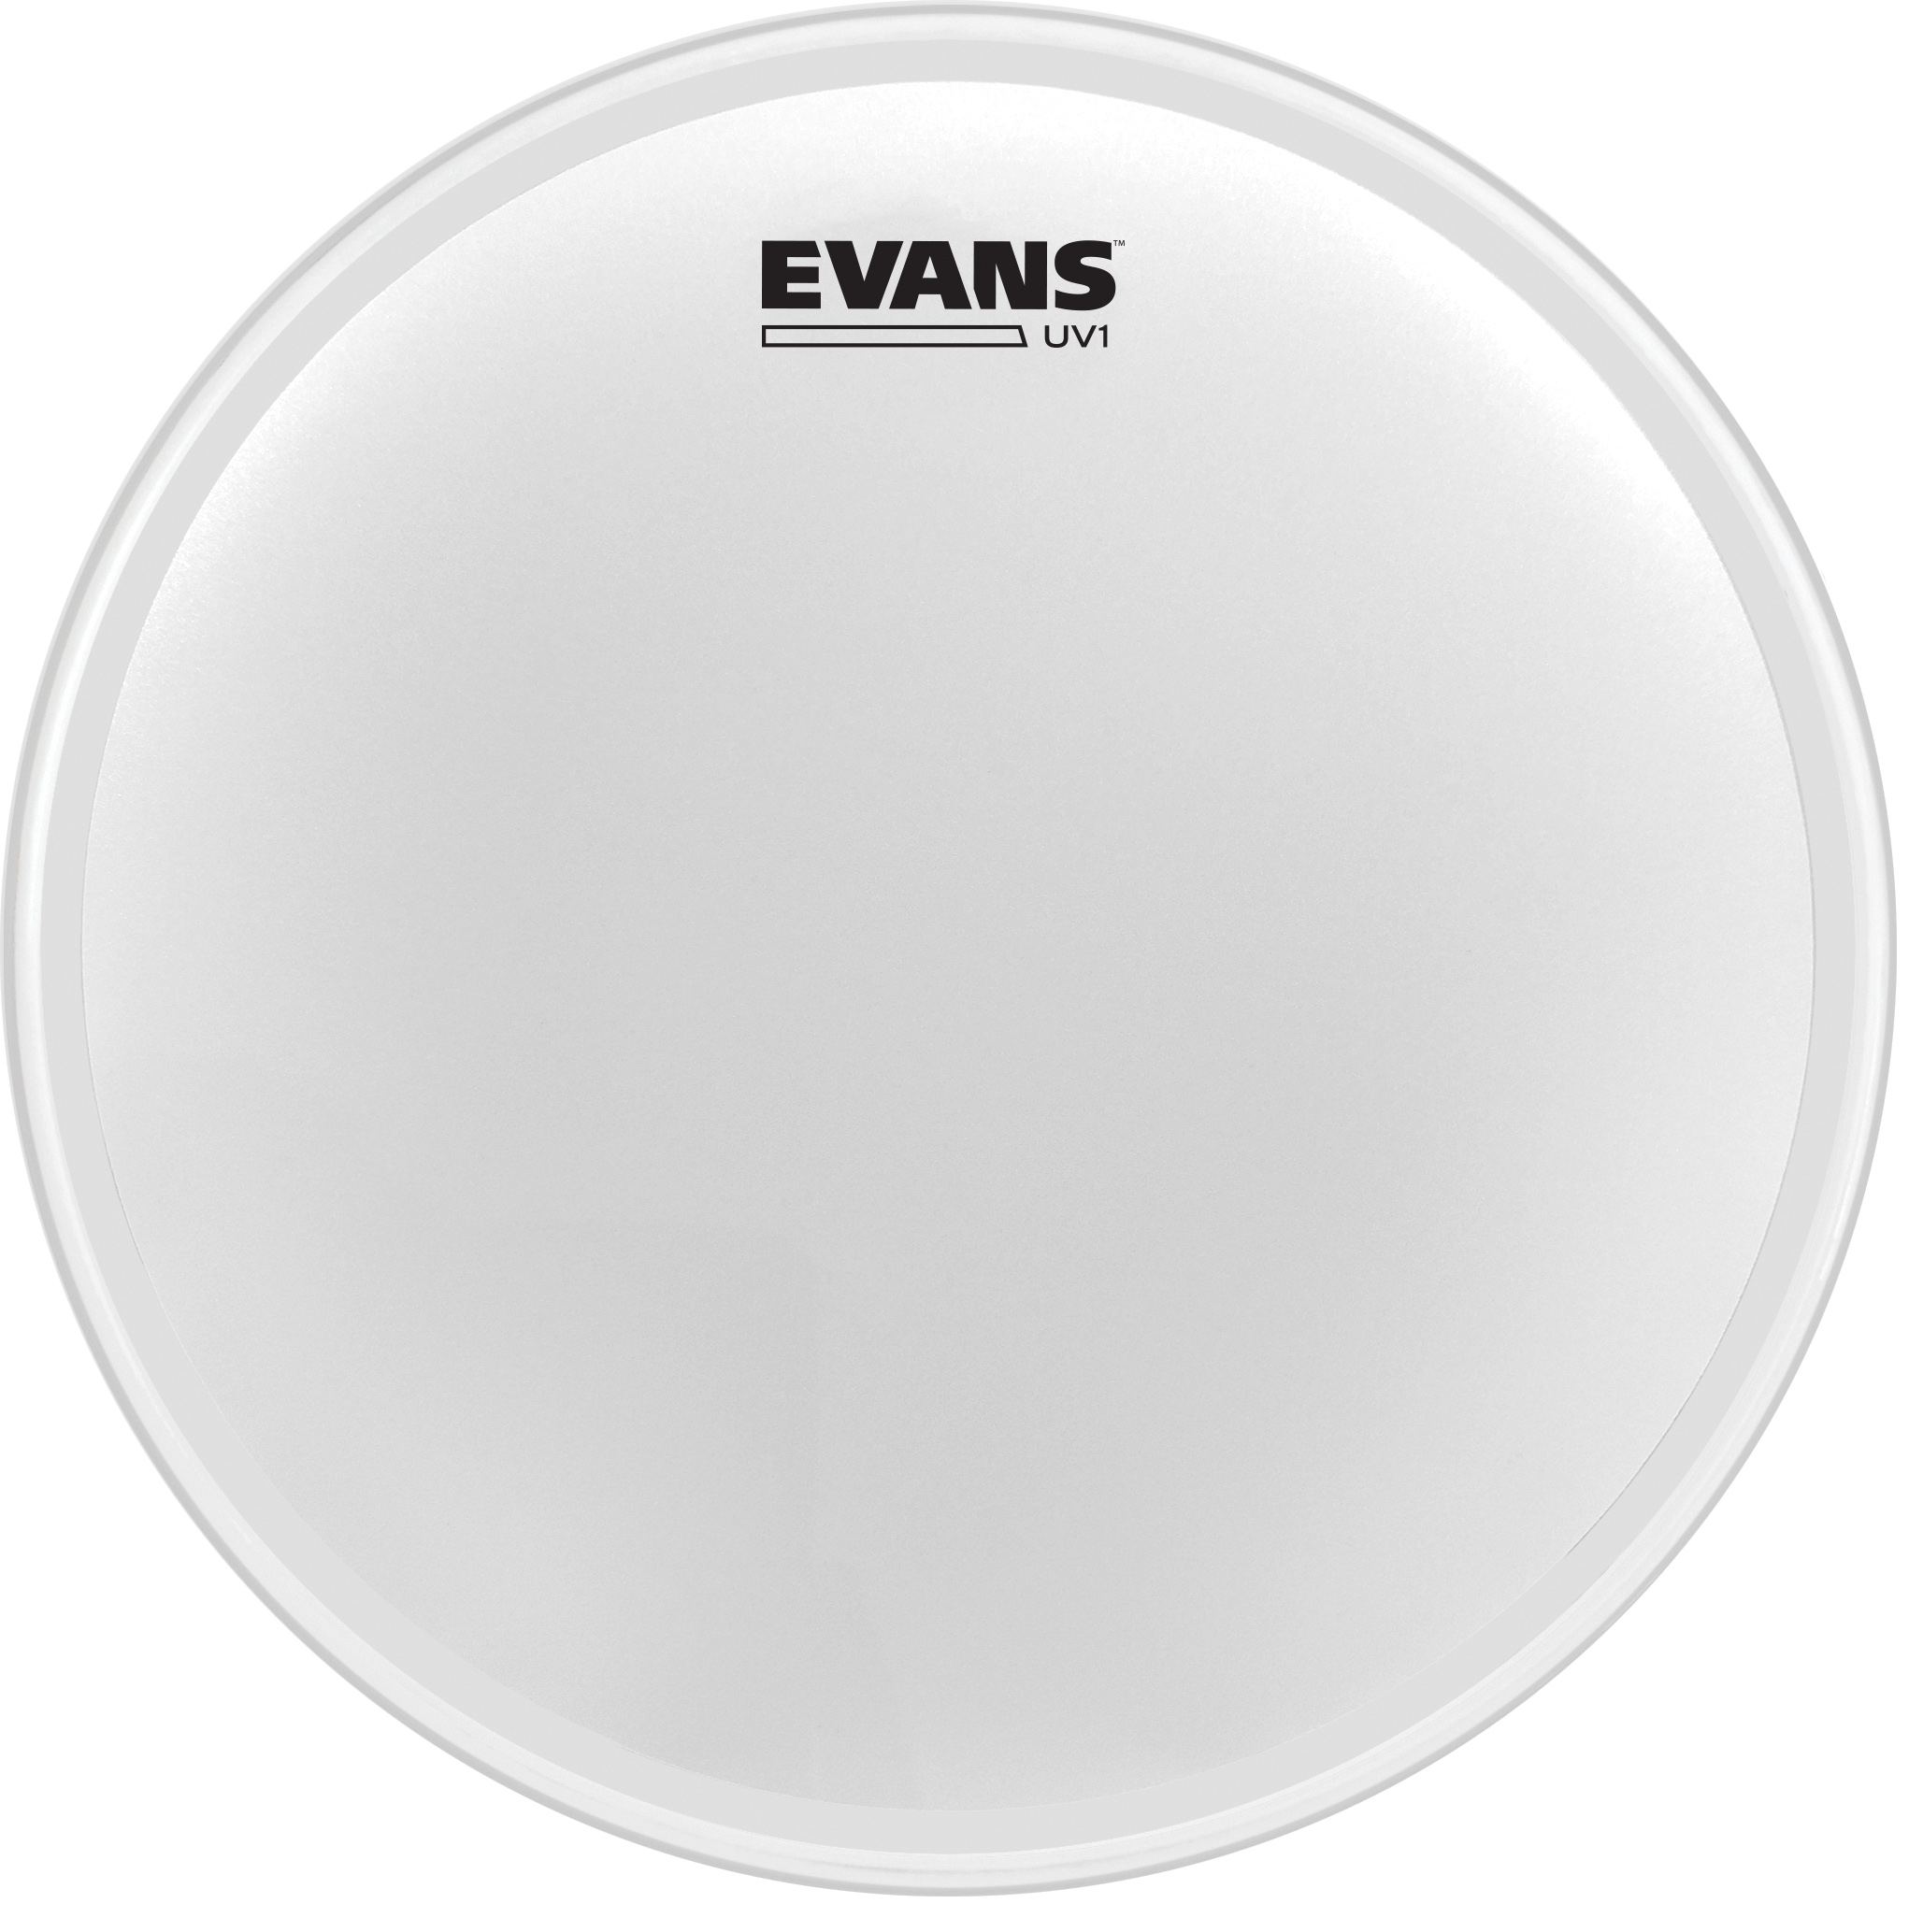 Evans 16" UV1 coated